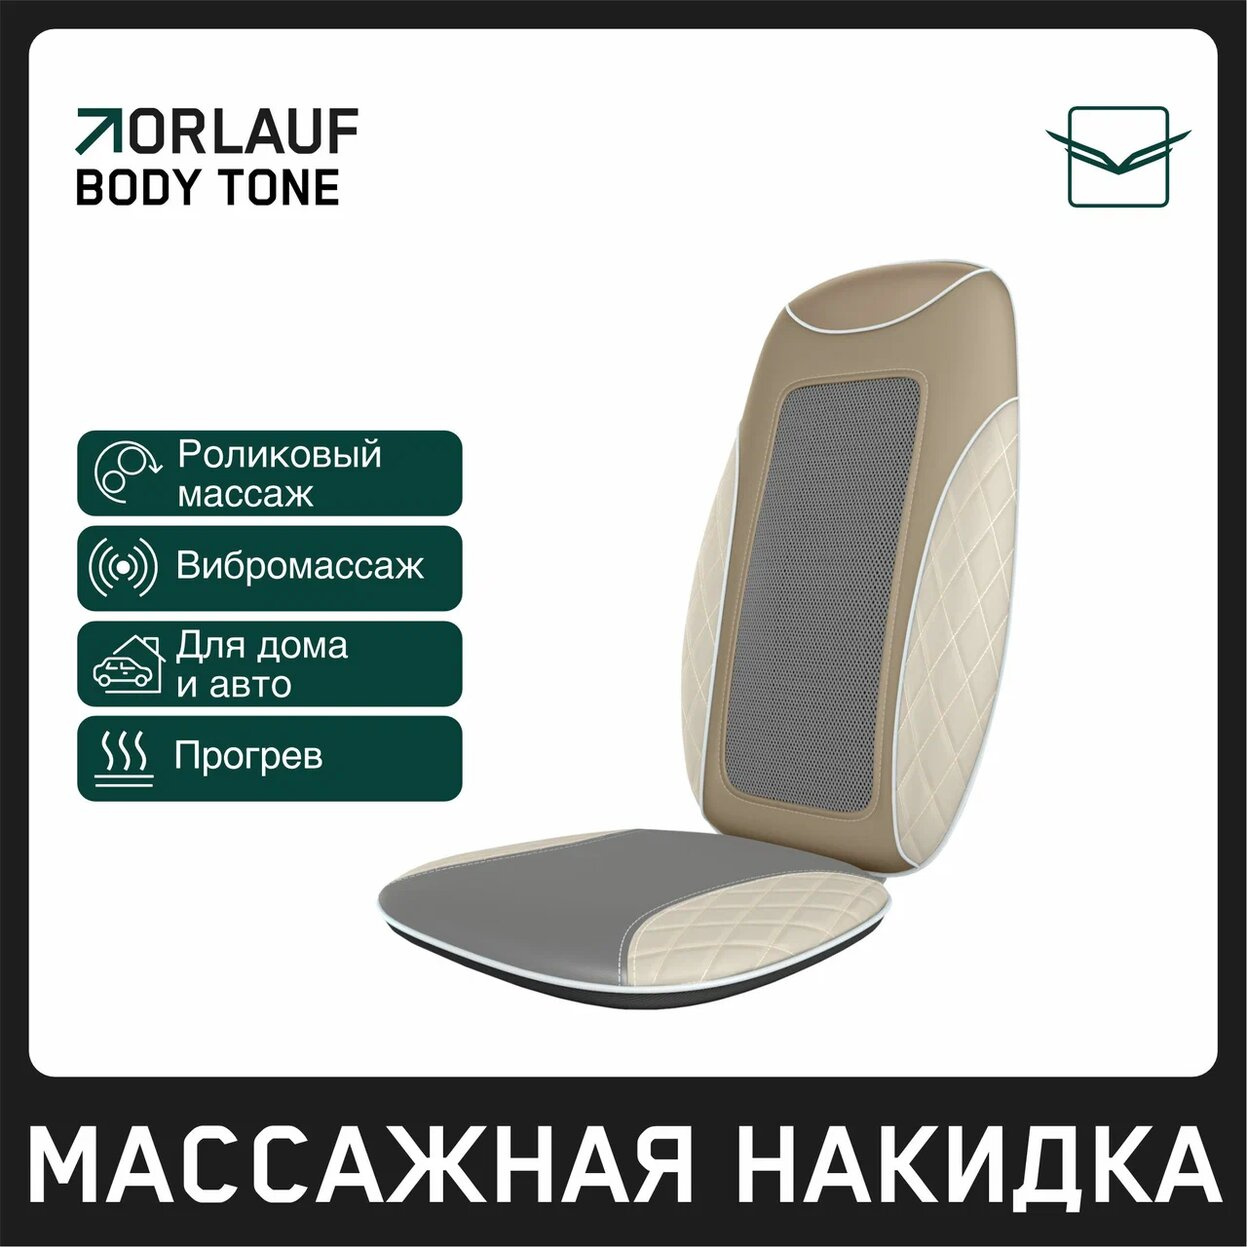 Body Tone в Екатеринбурге по цене 15400 ₽ в категории каталог Orlauf